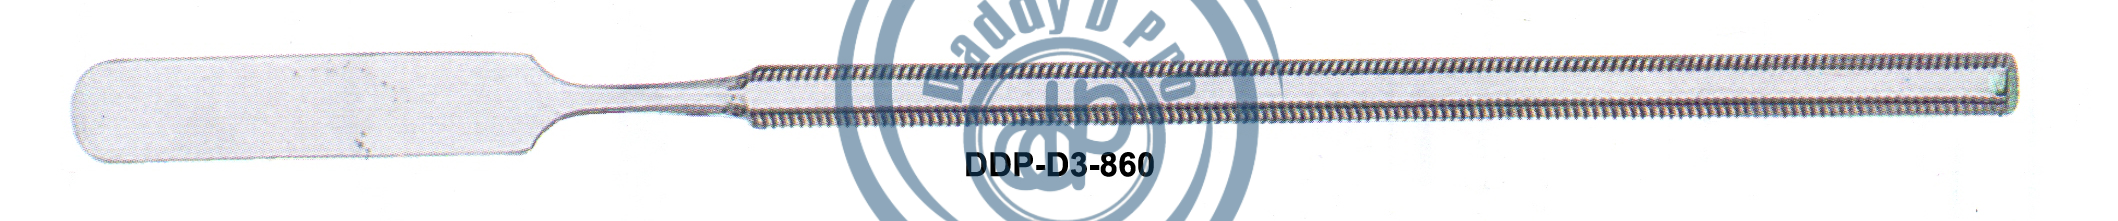 images/DDP-D3-860.png